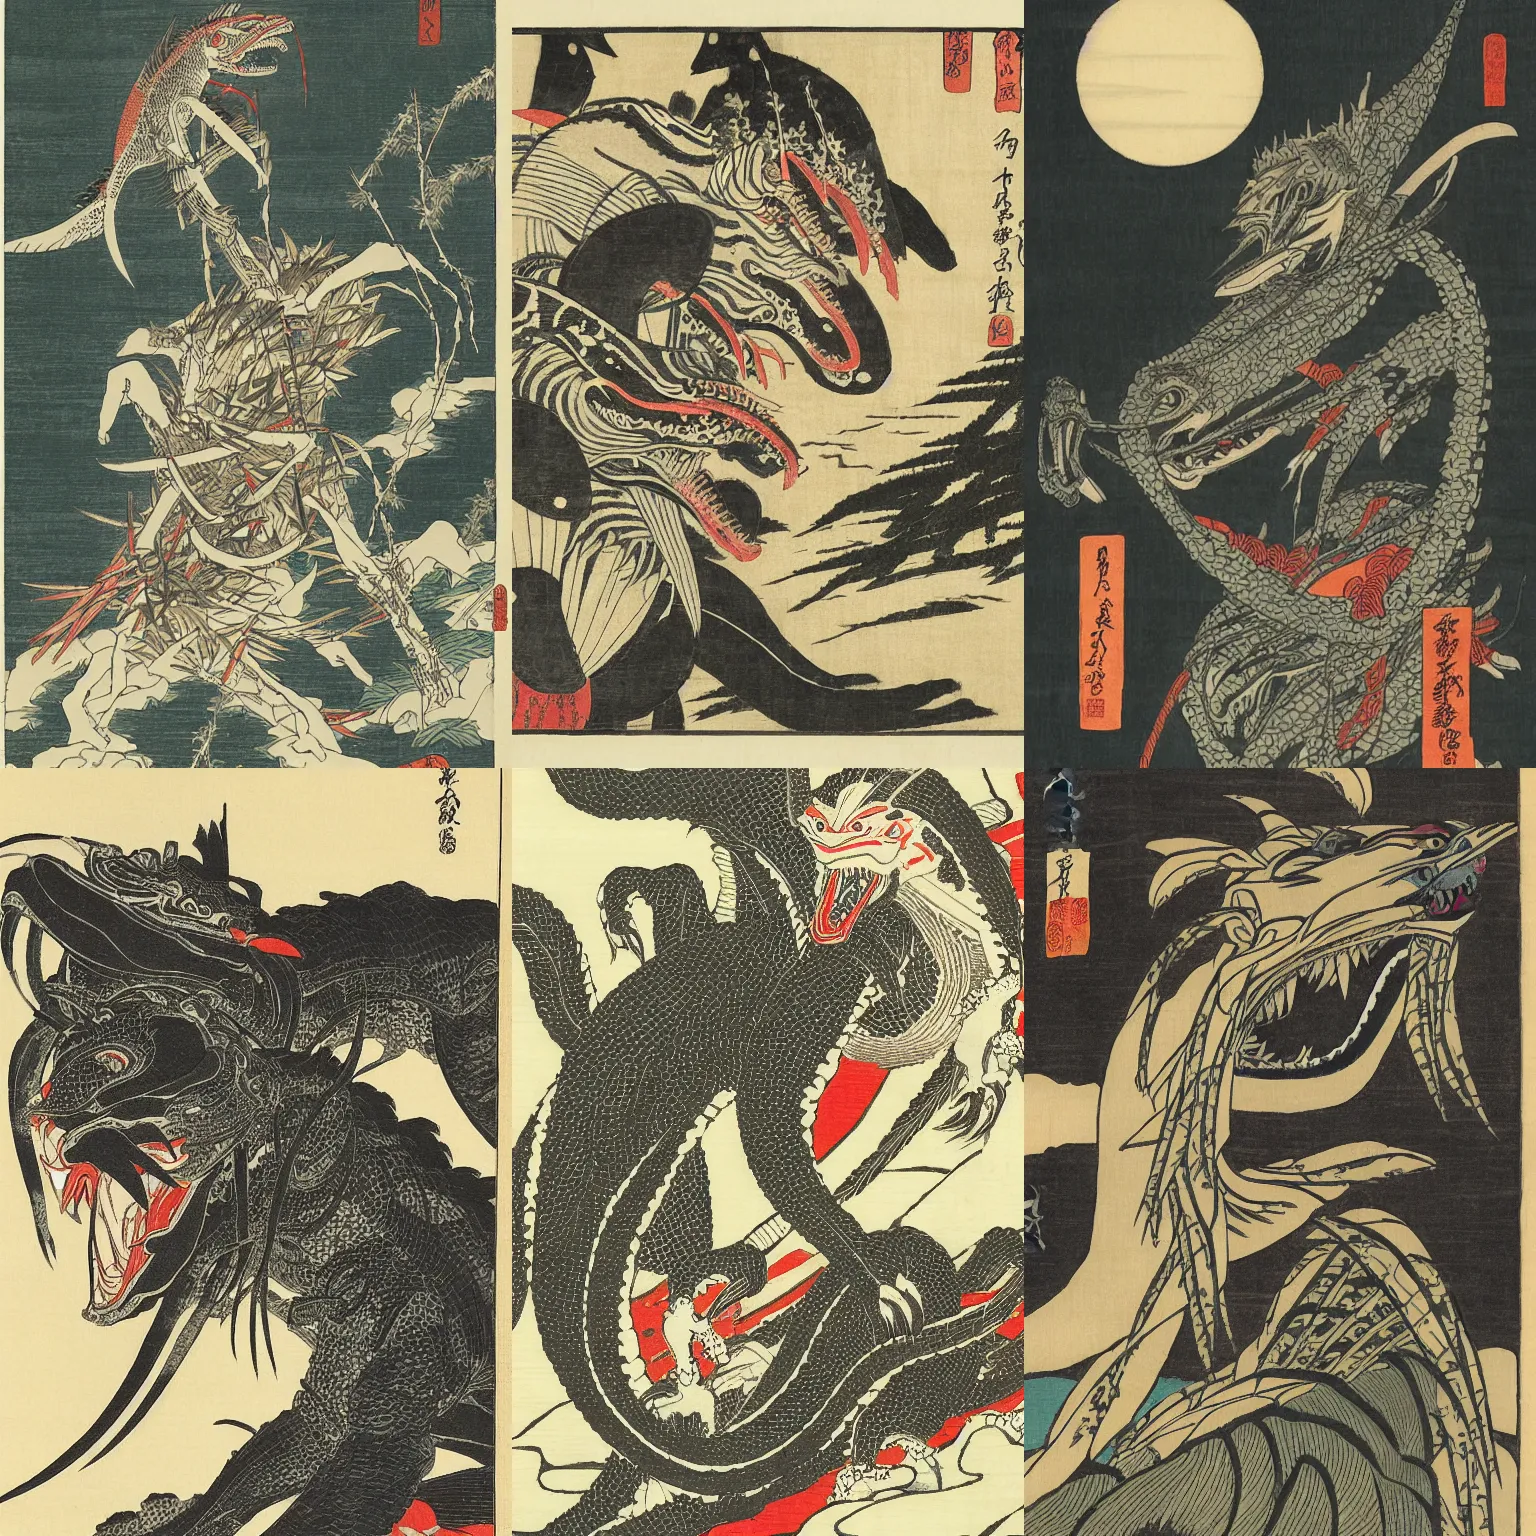 Prompt: a beautiful woodblock print by Utagawa Toyokuni of The Predator, Yautja, very detailed, high quality